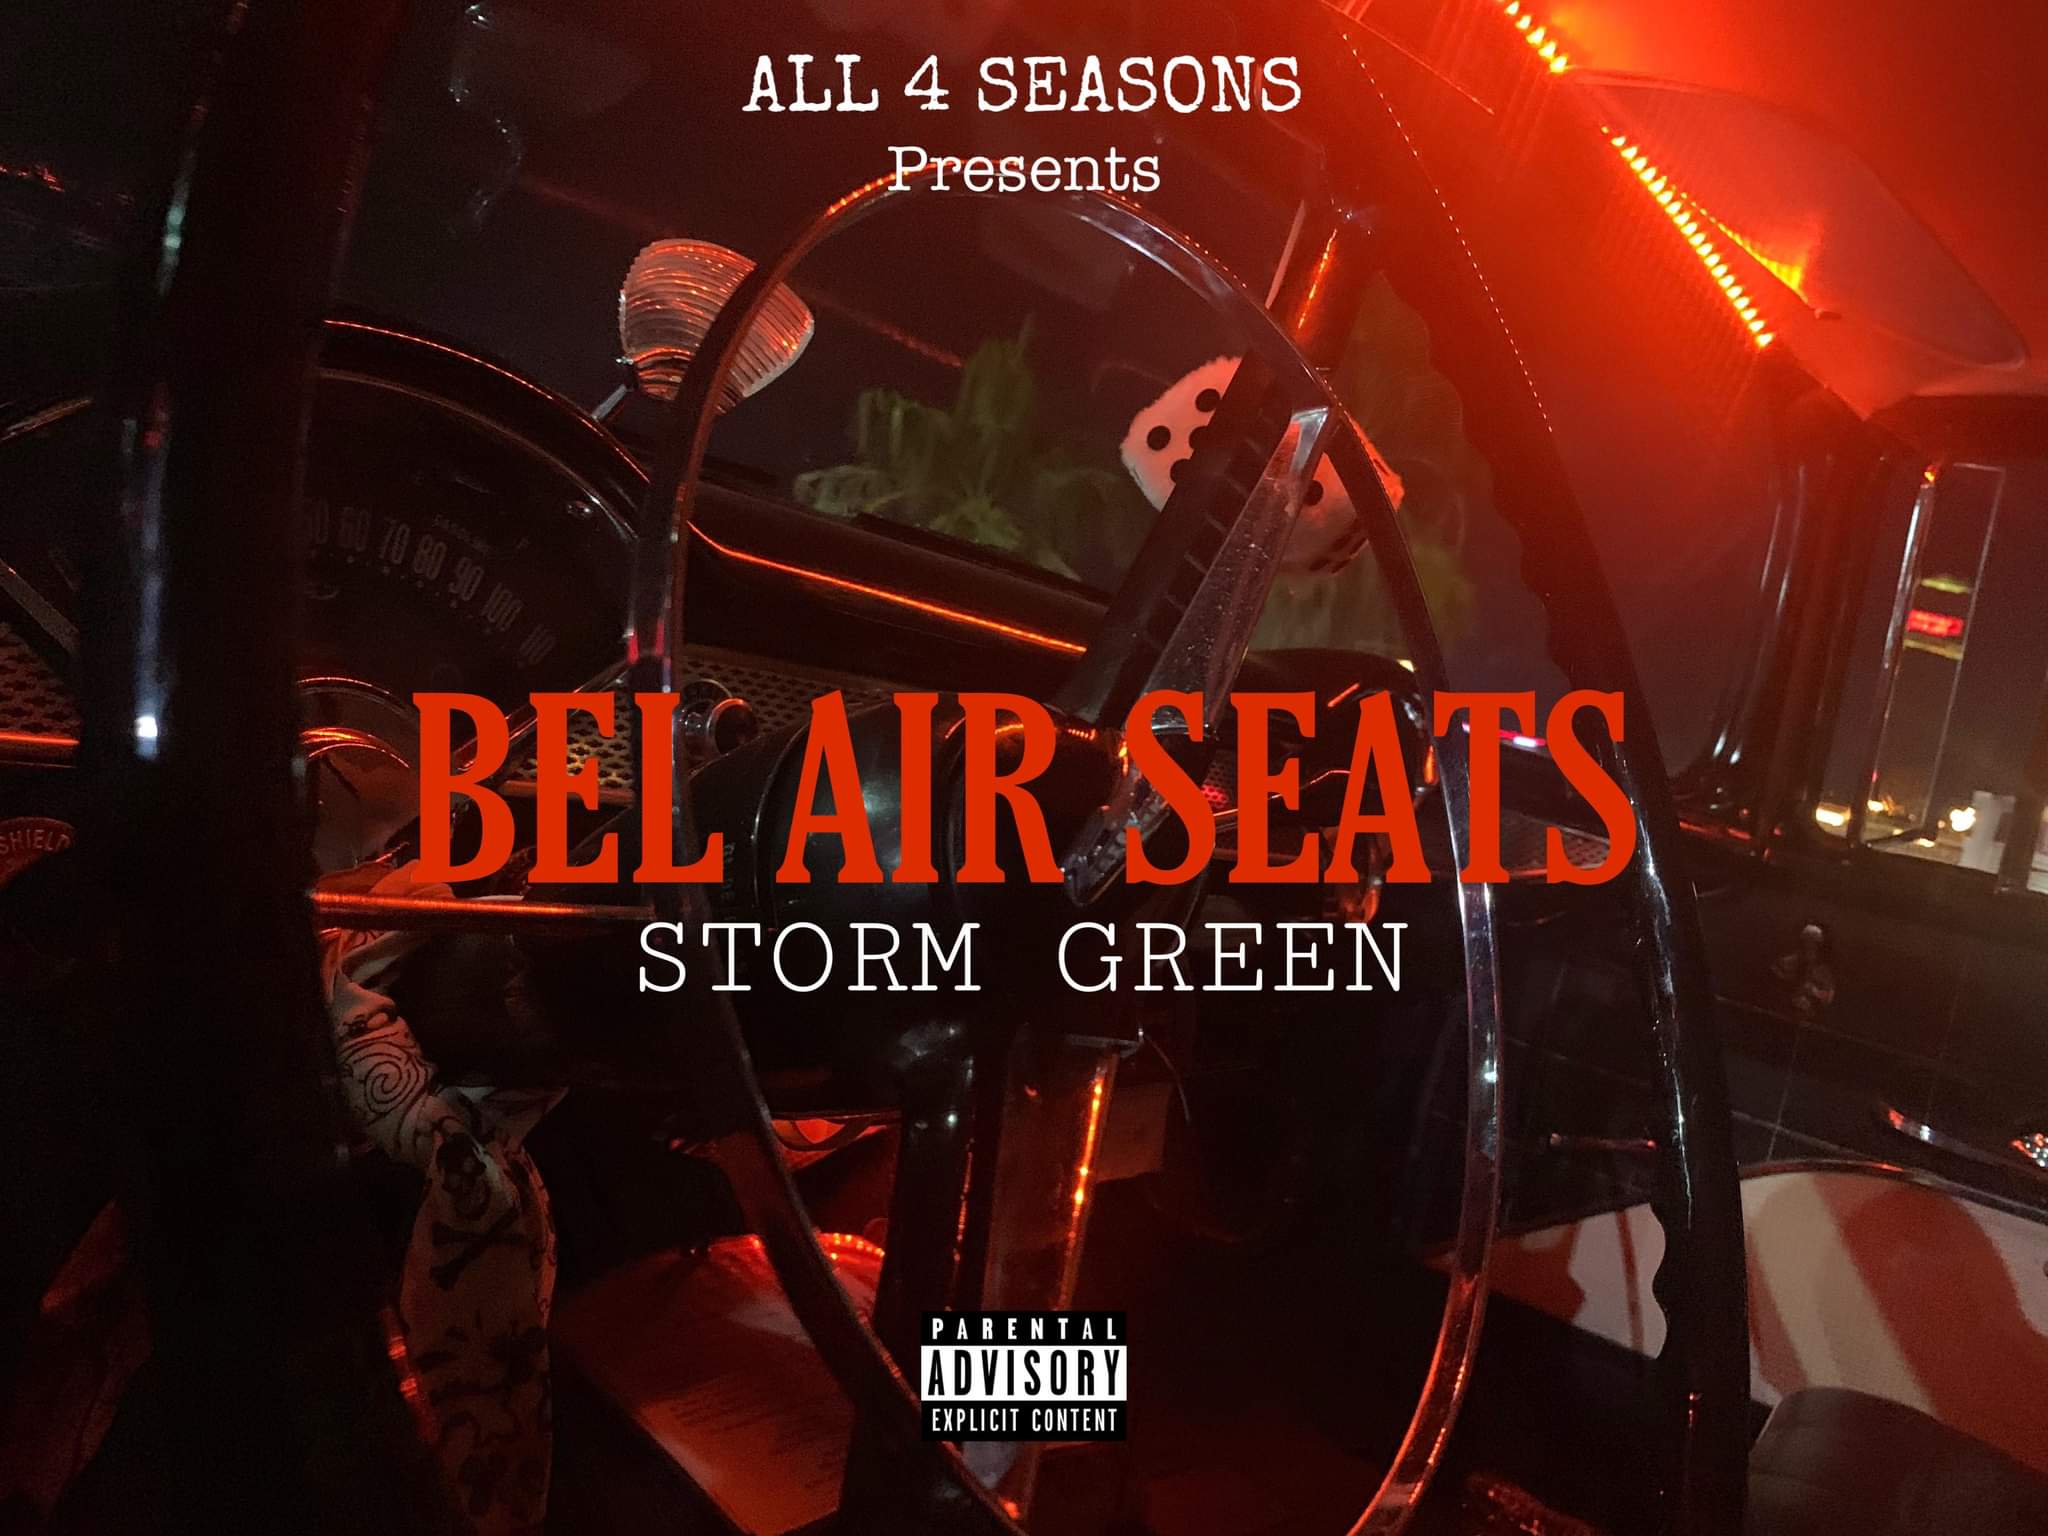 New Music! Storm Green “Bel Air Seats” @StormXGreen